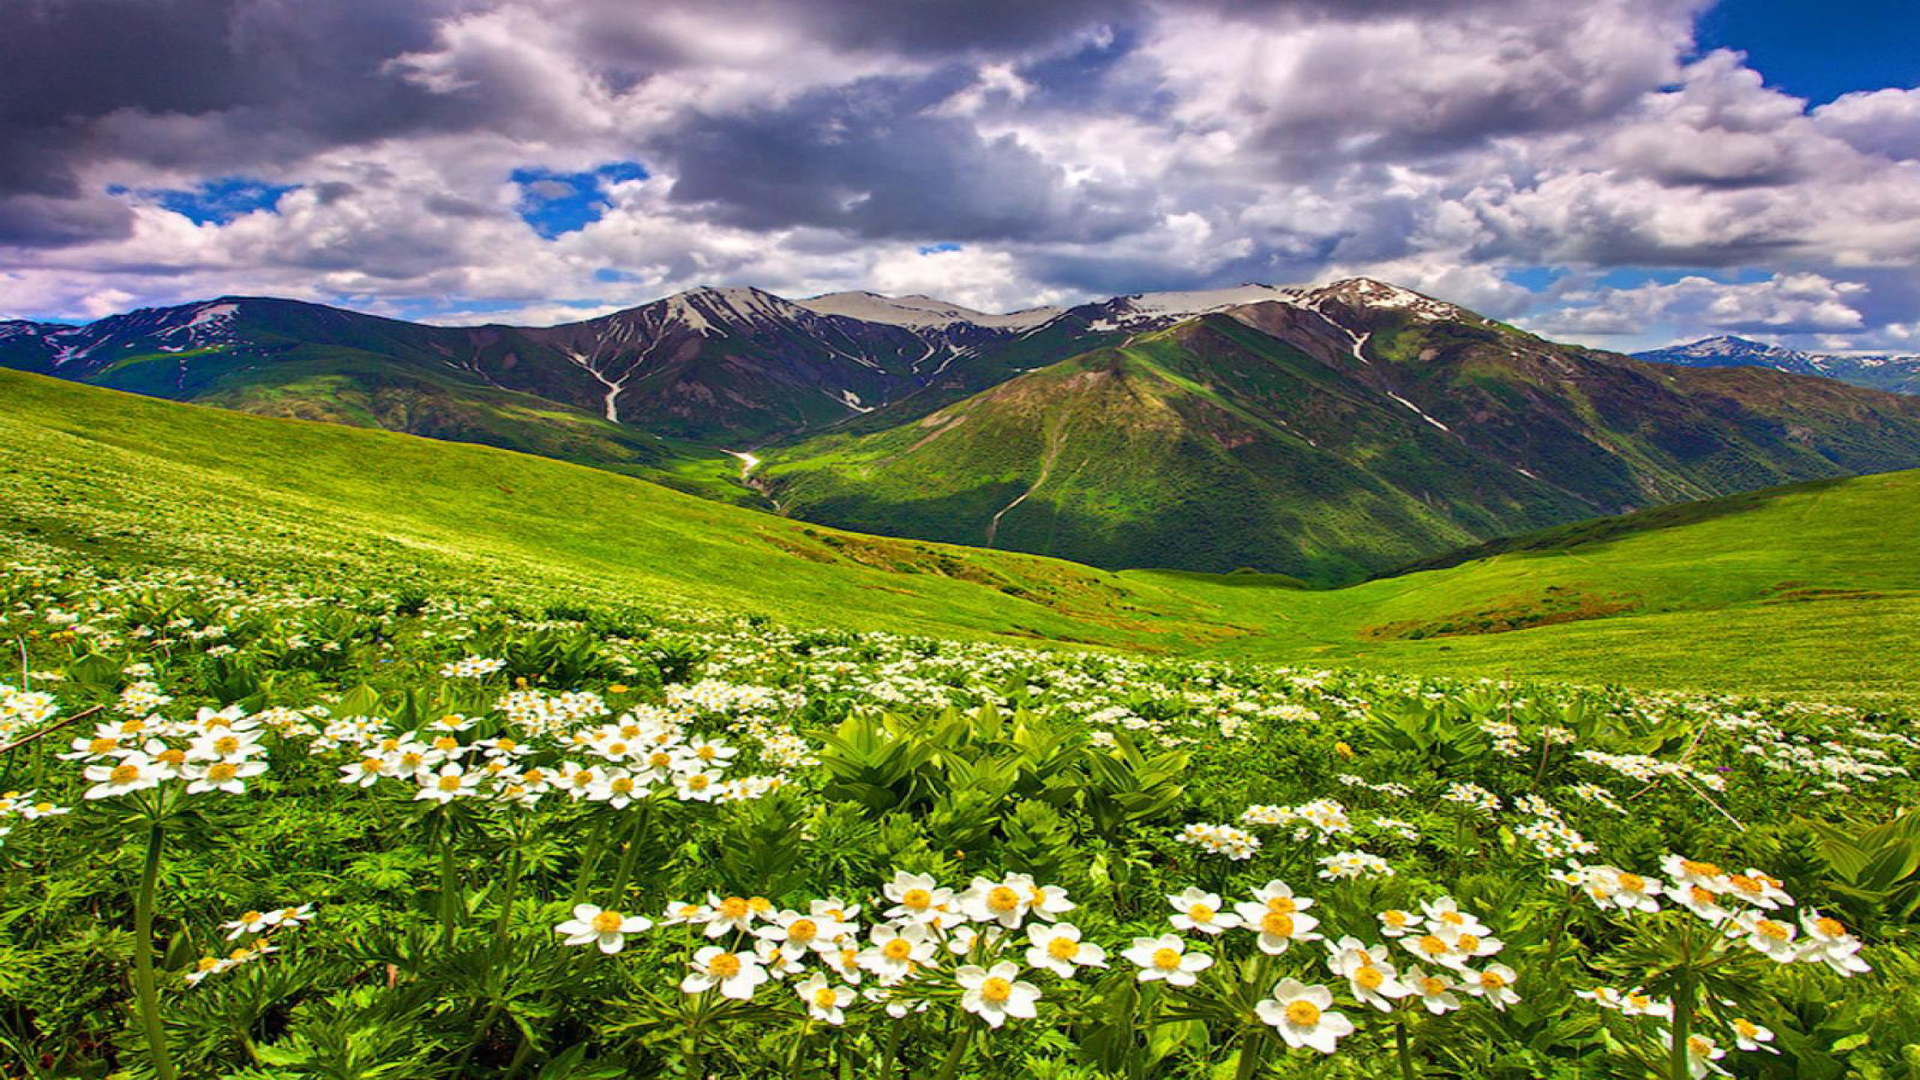 Field Of Flowers In The Mountain Summer Sky Hd Wallpaper Wallpapers13 Com